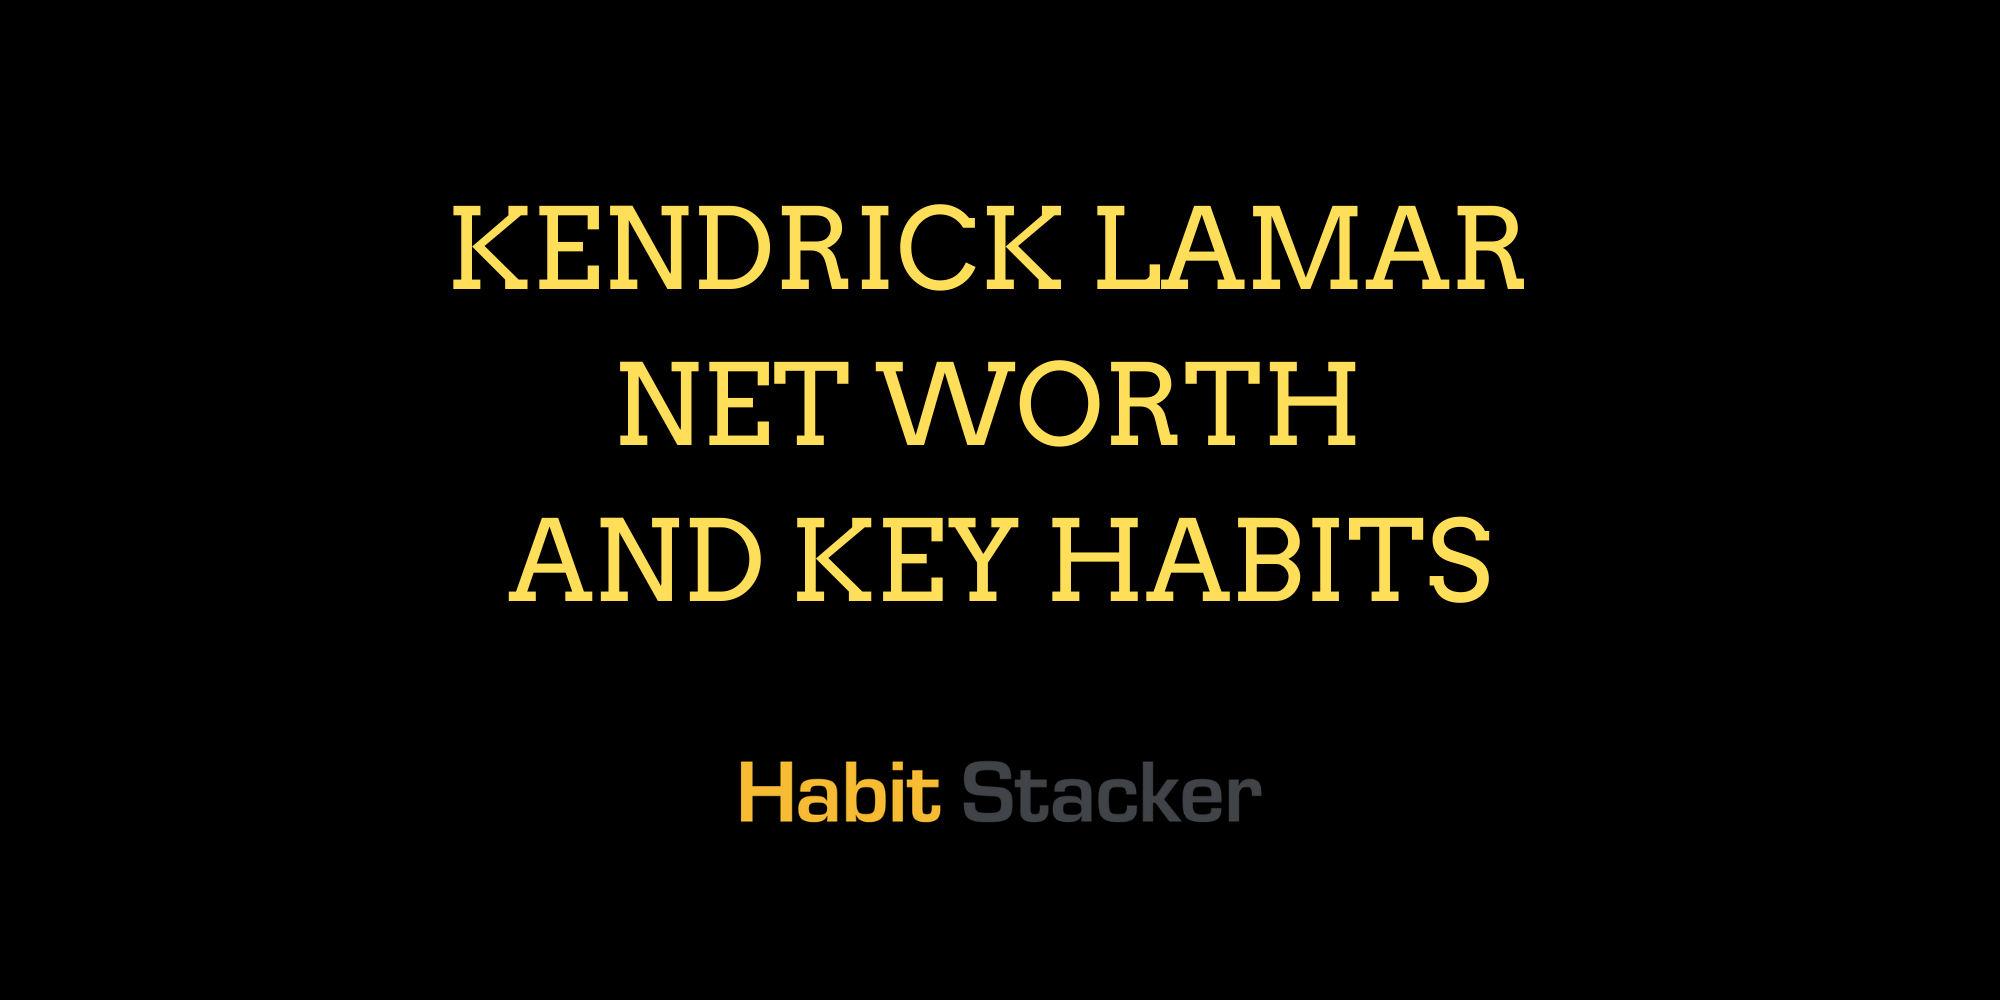 Kendrick Lamar Net Worth and Key Habits